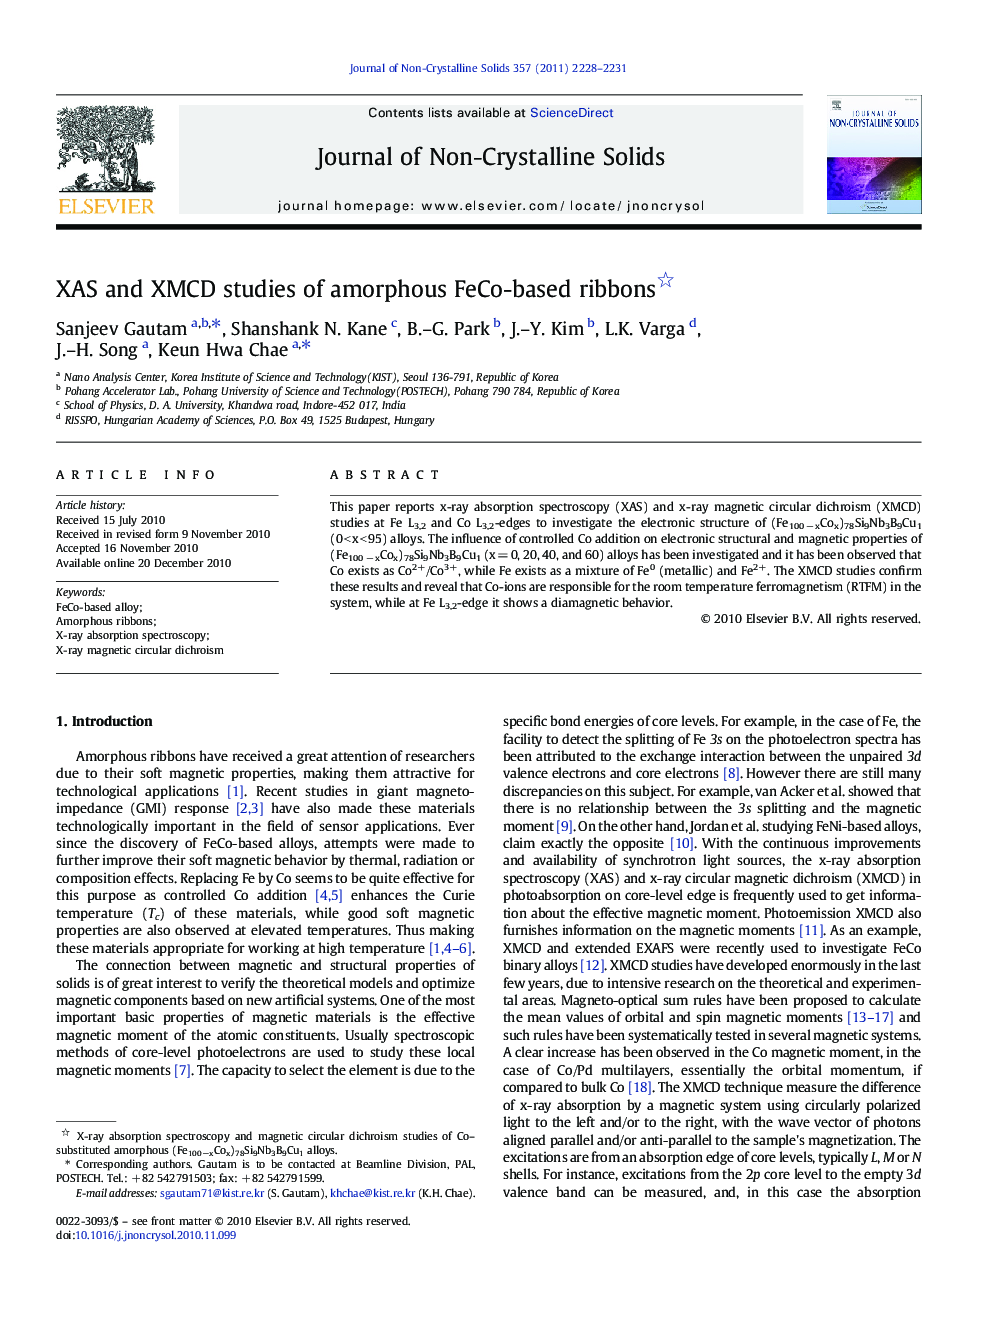 XAS and XMCD studies of amorphous FeCo-based ribbons 